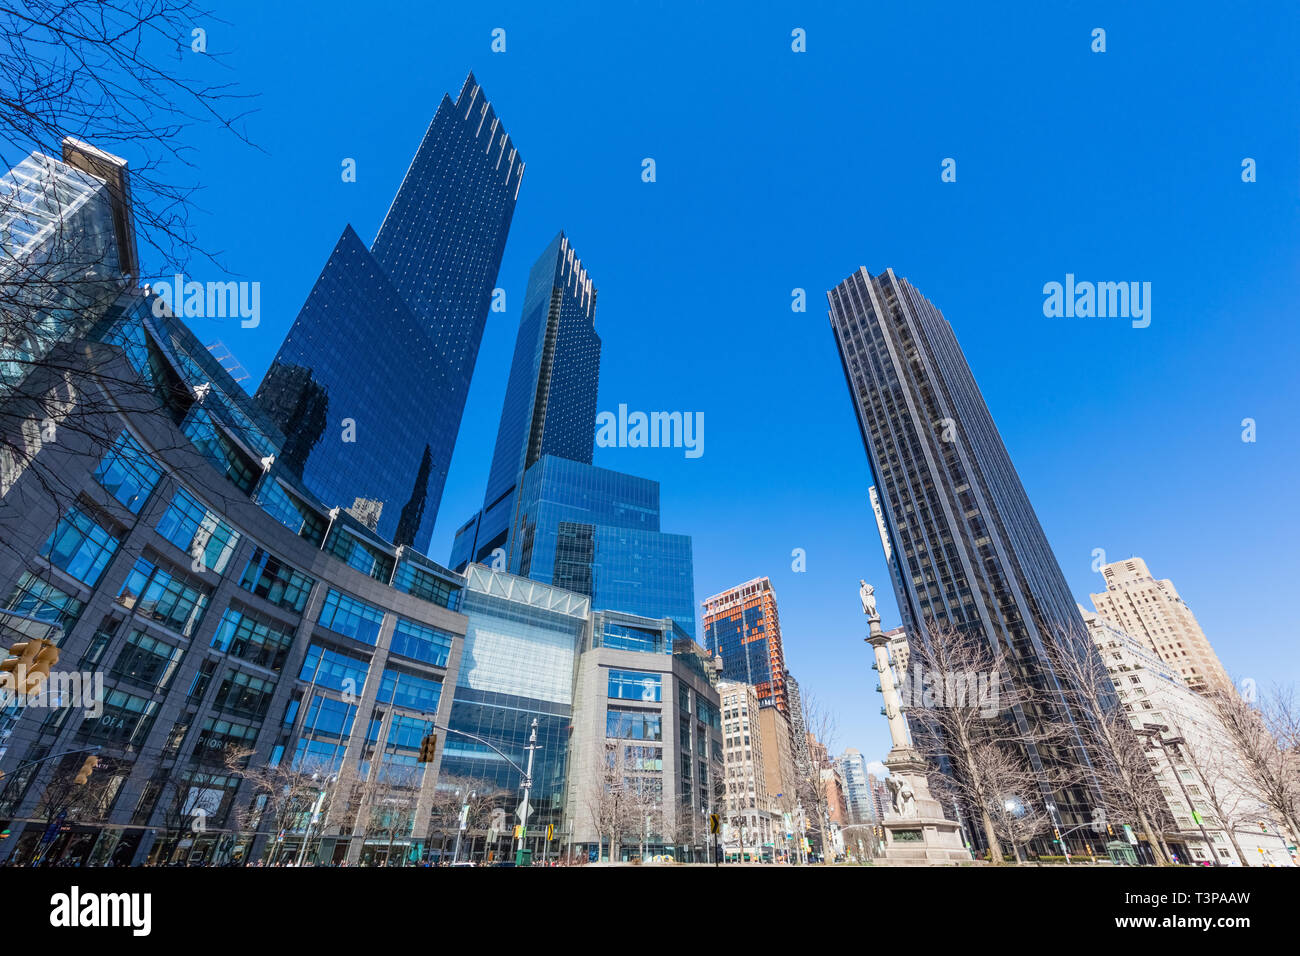 Colombus Circle one of the main Manhattan Landmarks in New York City USA Stock Photo